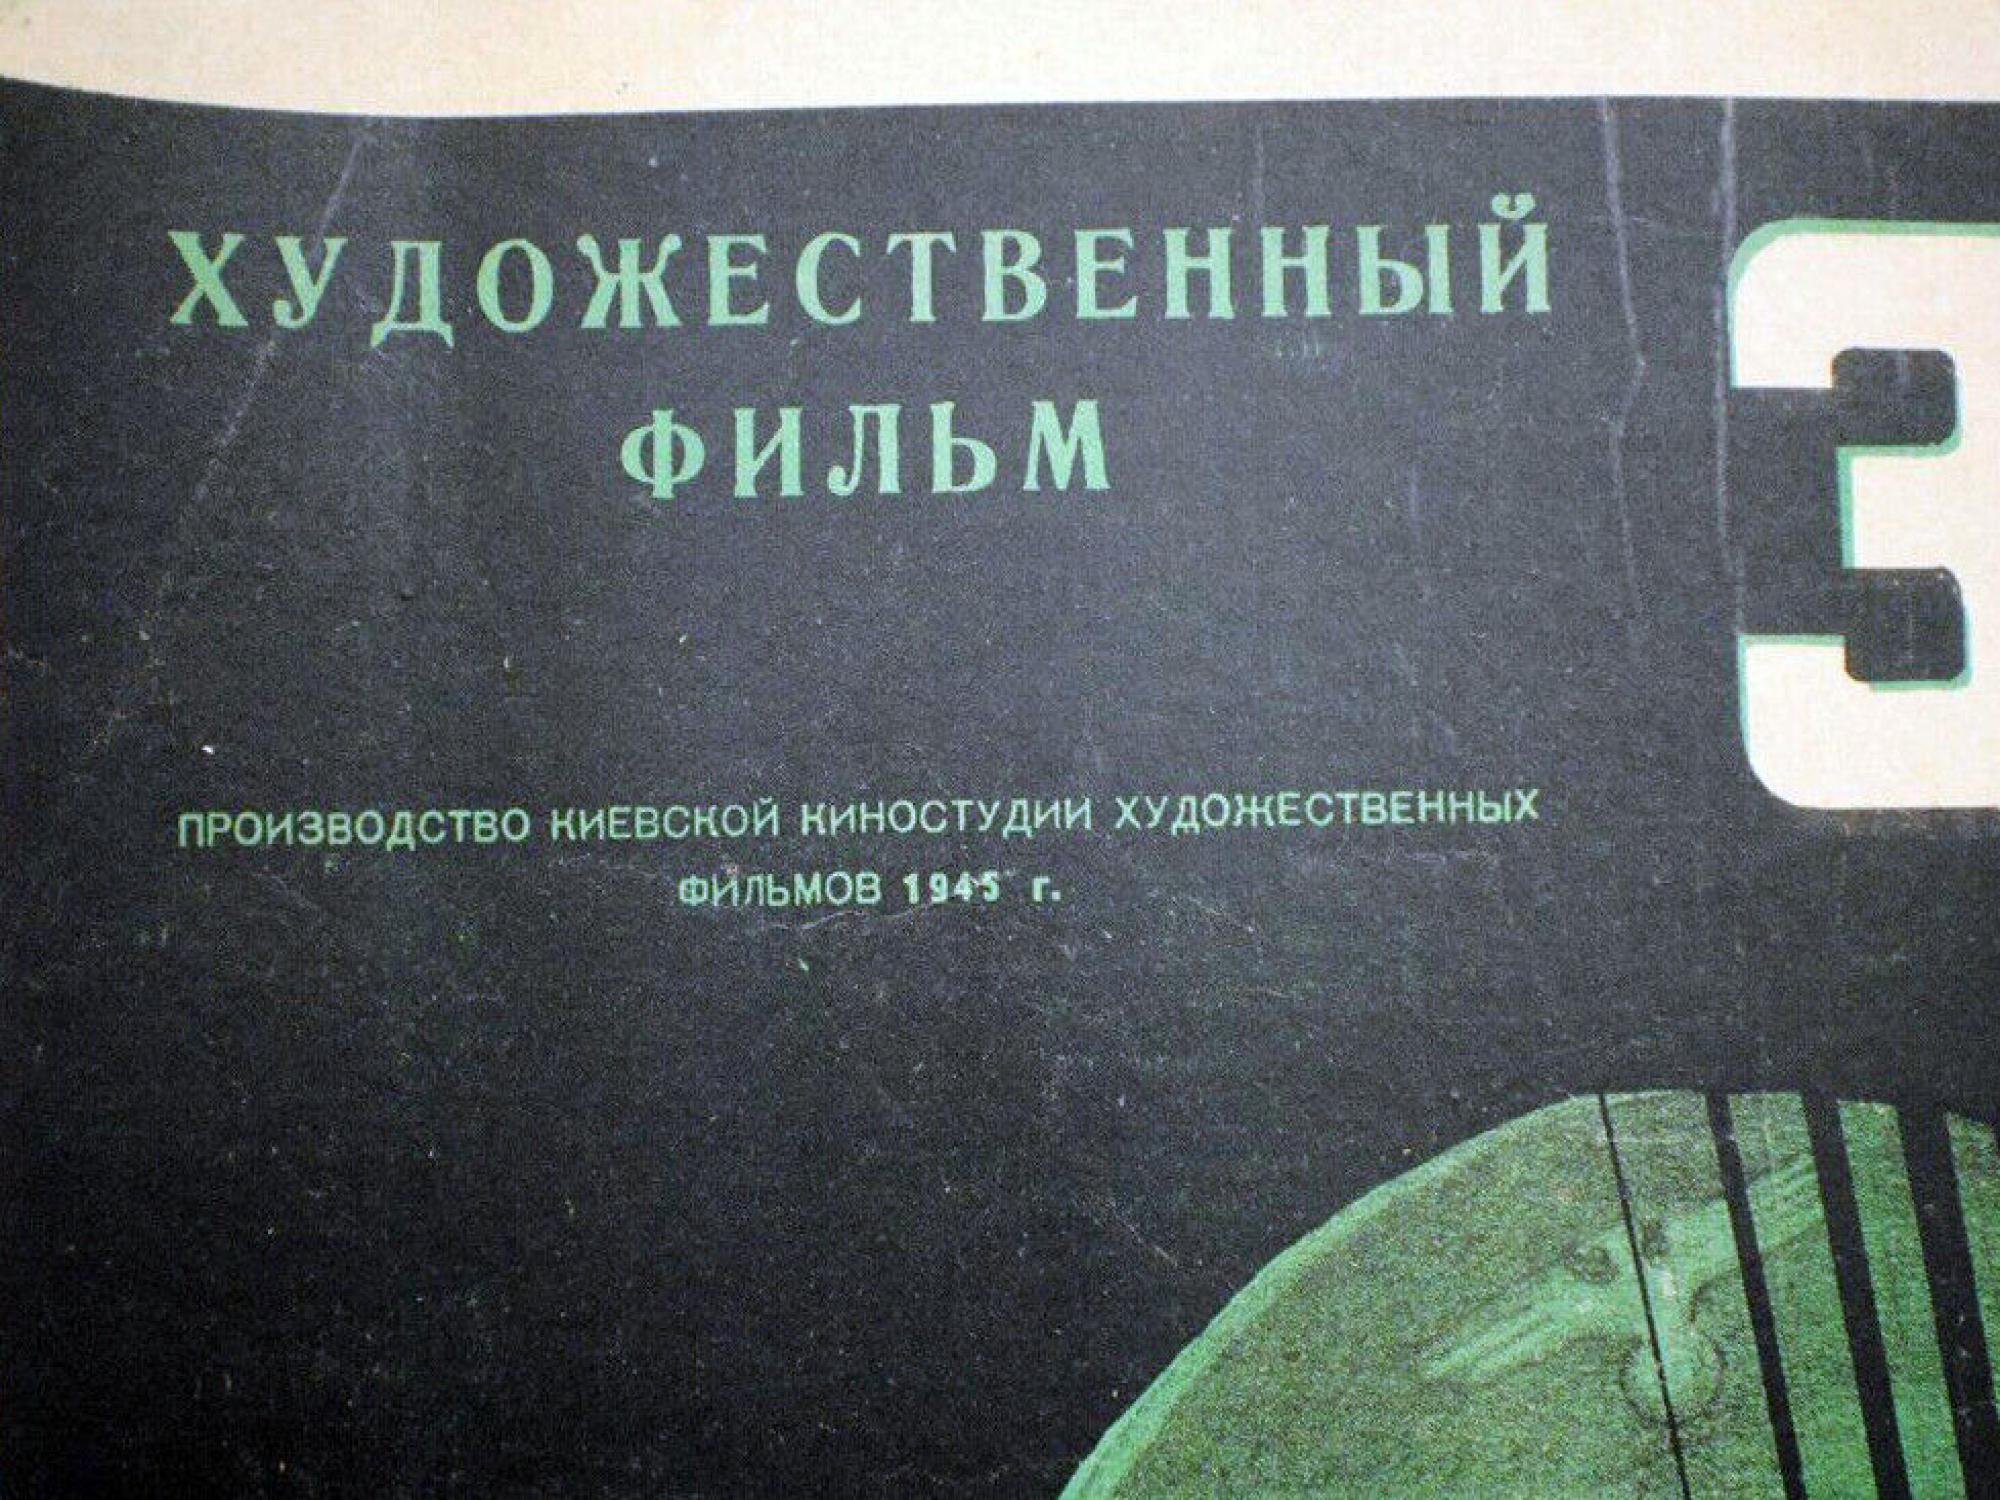 RARE RUSSIAN SOVIET ORIGINAL MOVIE POSTER 1947 PIC-3